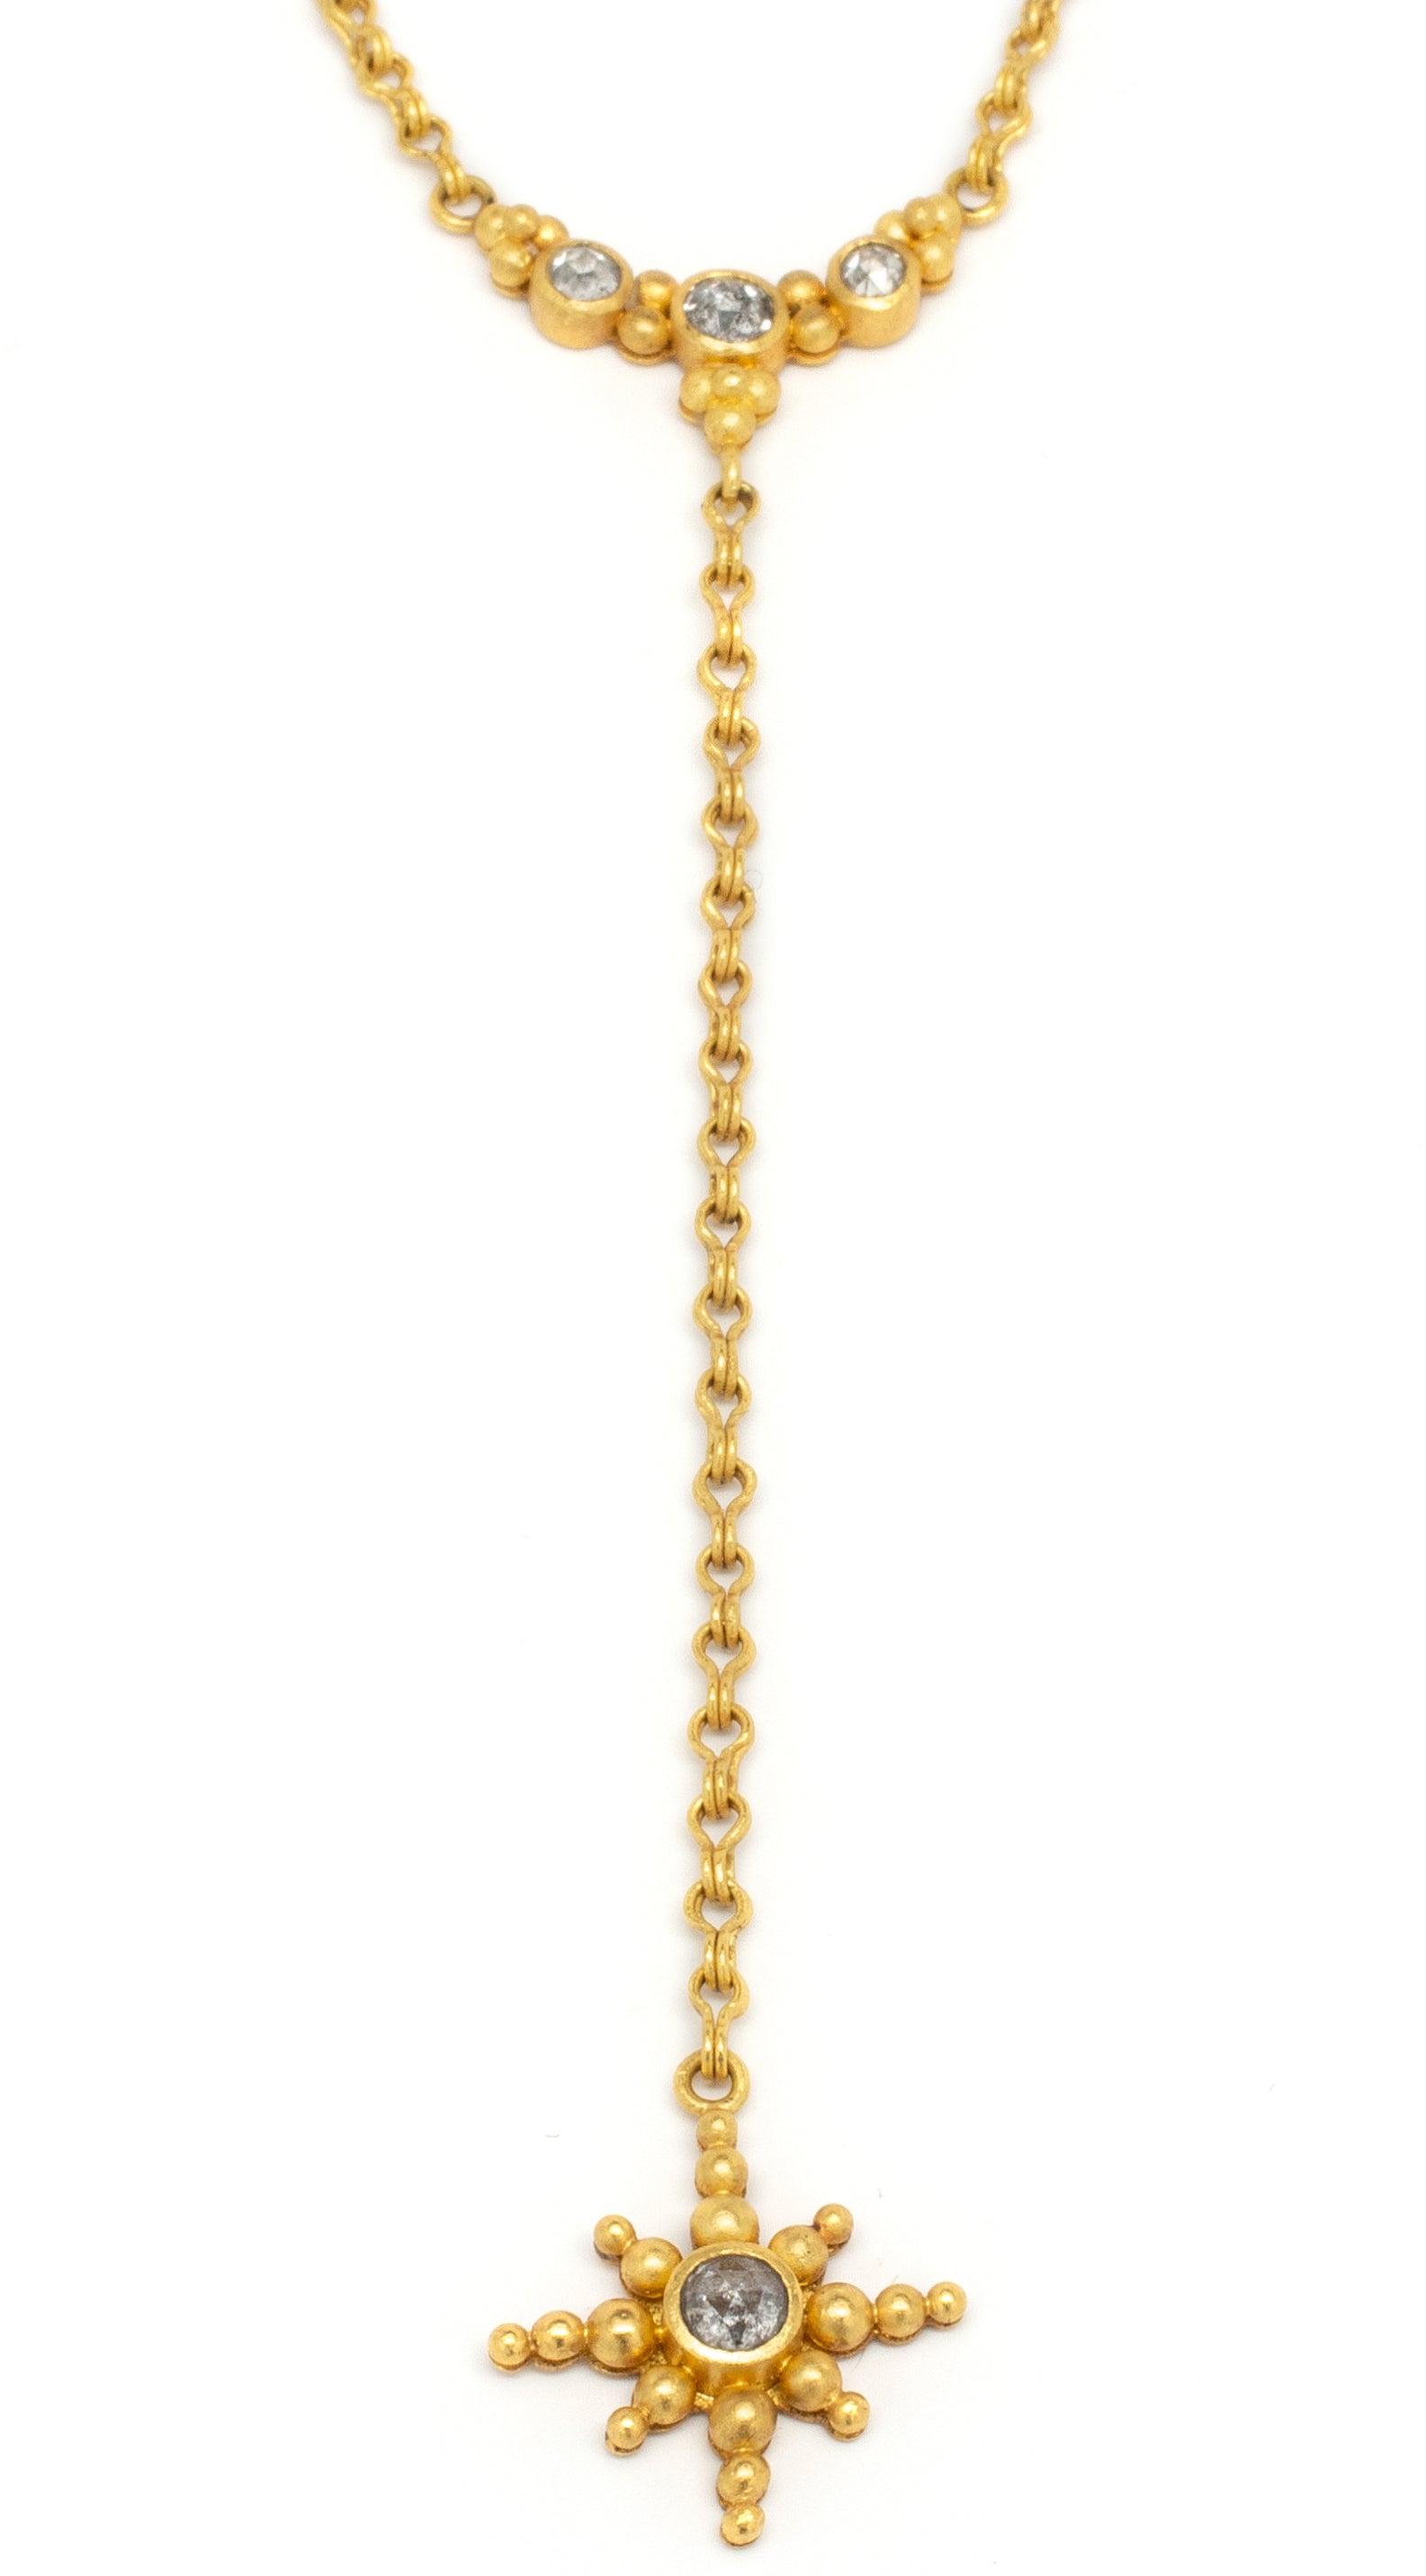 Linda HOJ - 22 Karat Diamond Gold Star Necklace - Ethos of London - Contemporary Fine Jewelry